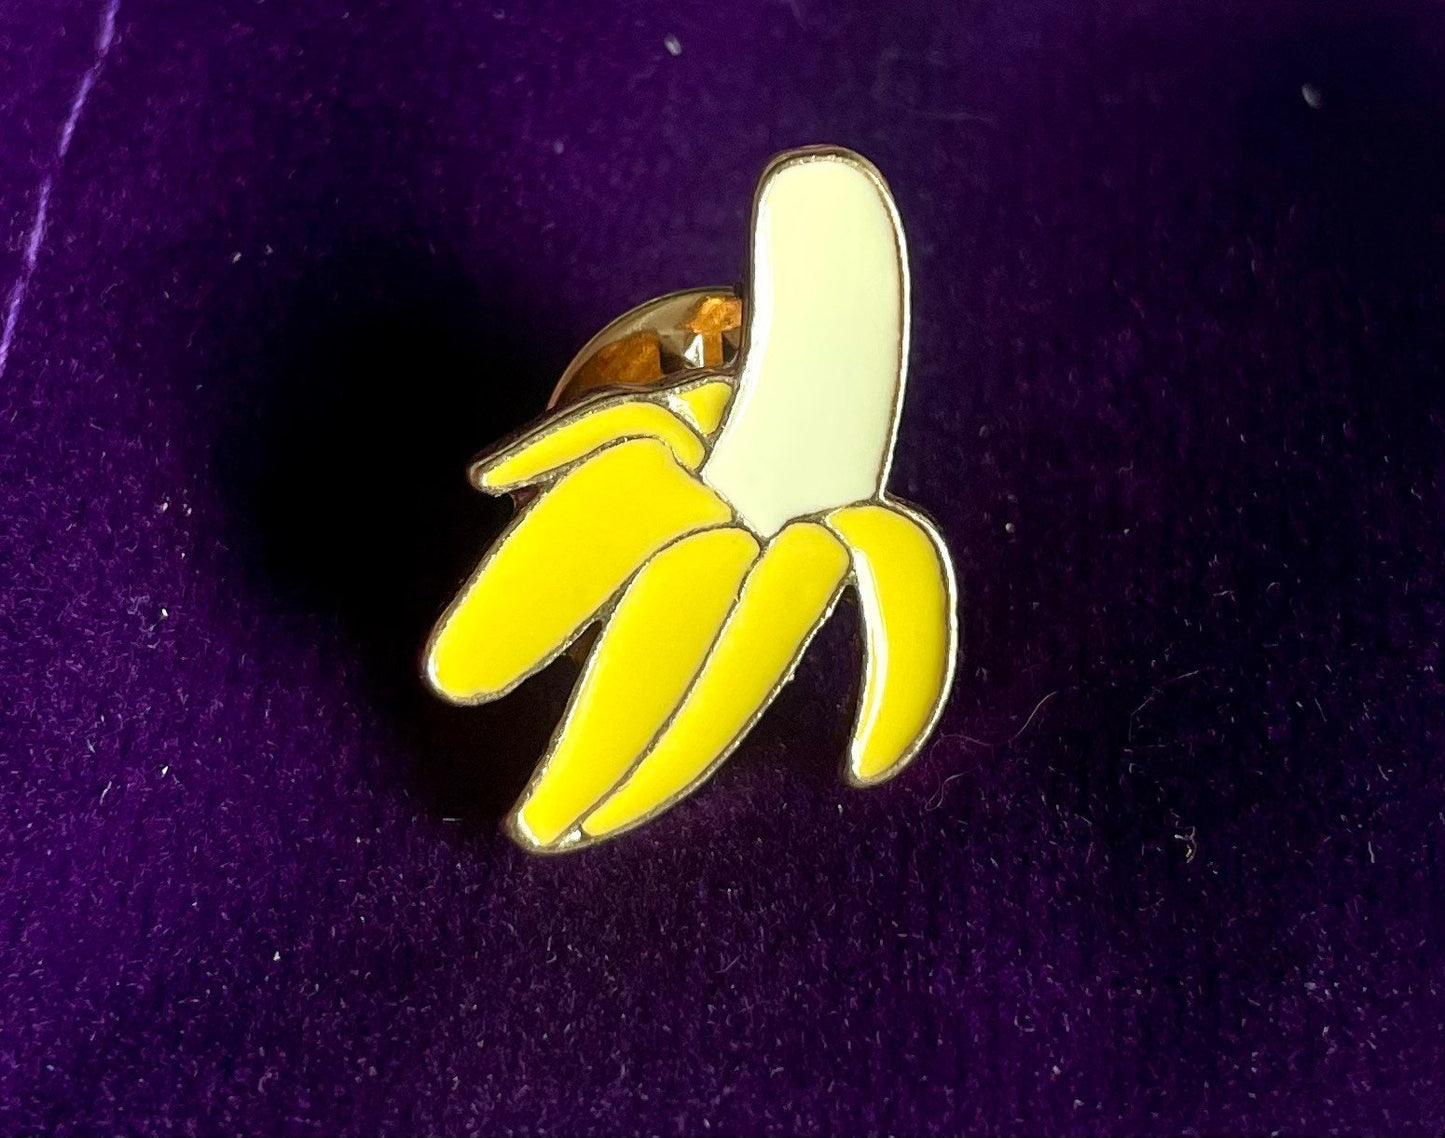 Banana enamel pin badge